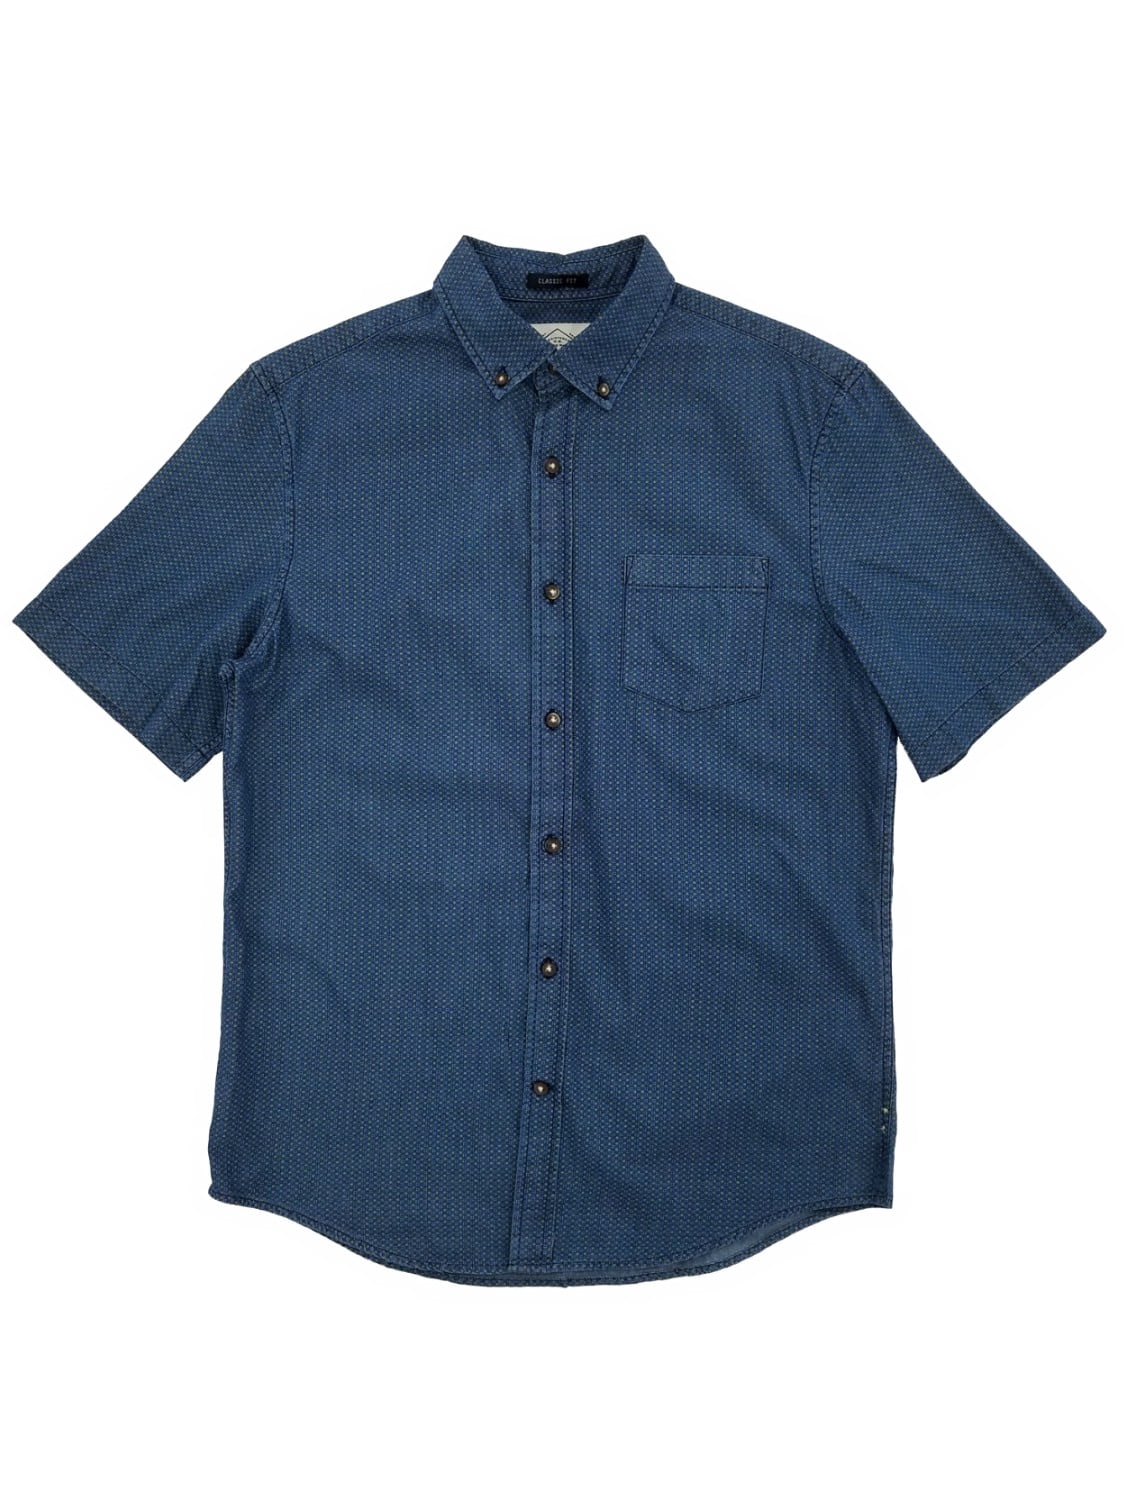 St. John's Bay - Mens Indigo Square Geo Button-Down Short Sleeve Shirt ...